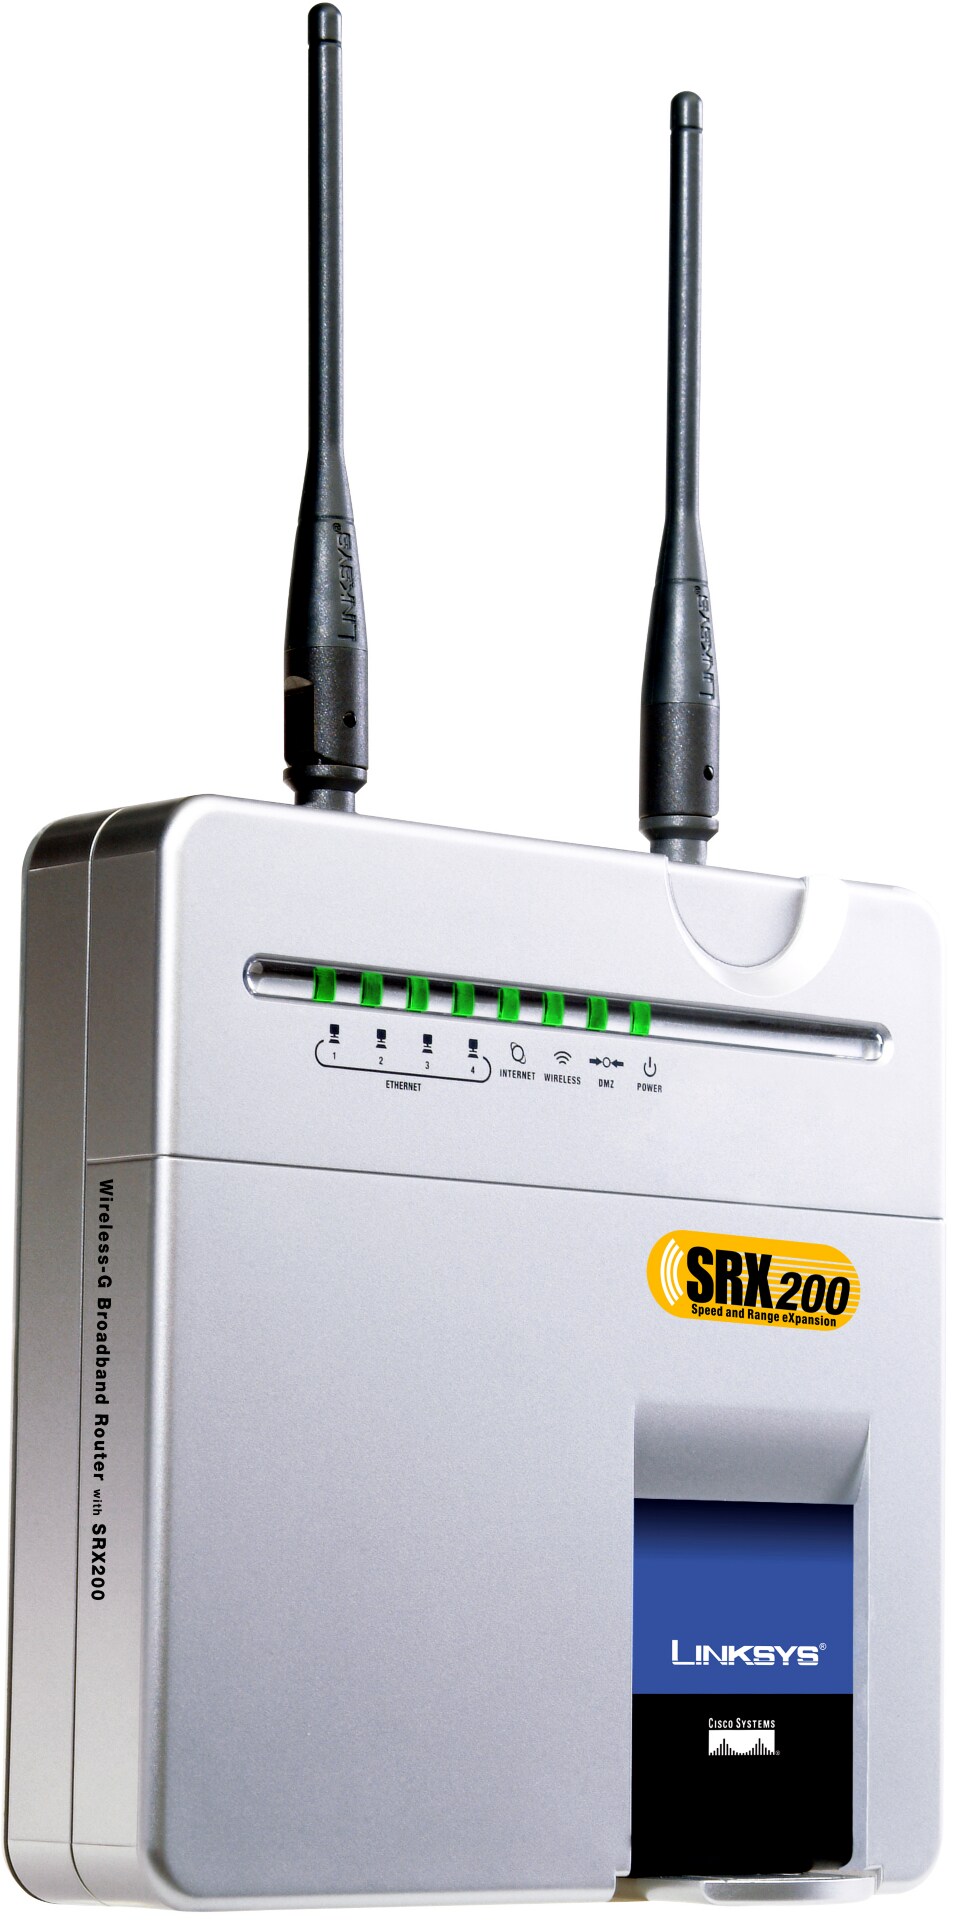 Linksys Wireless-G Broadband Router with SRX200						
